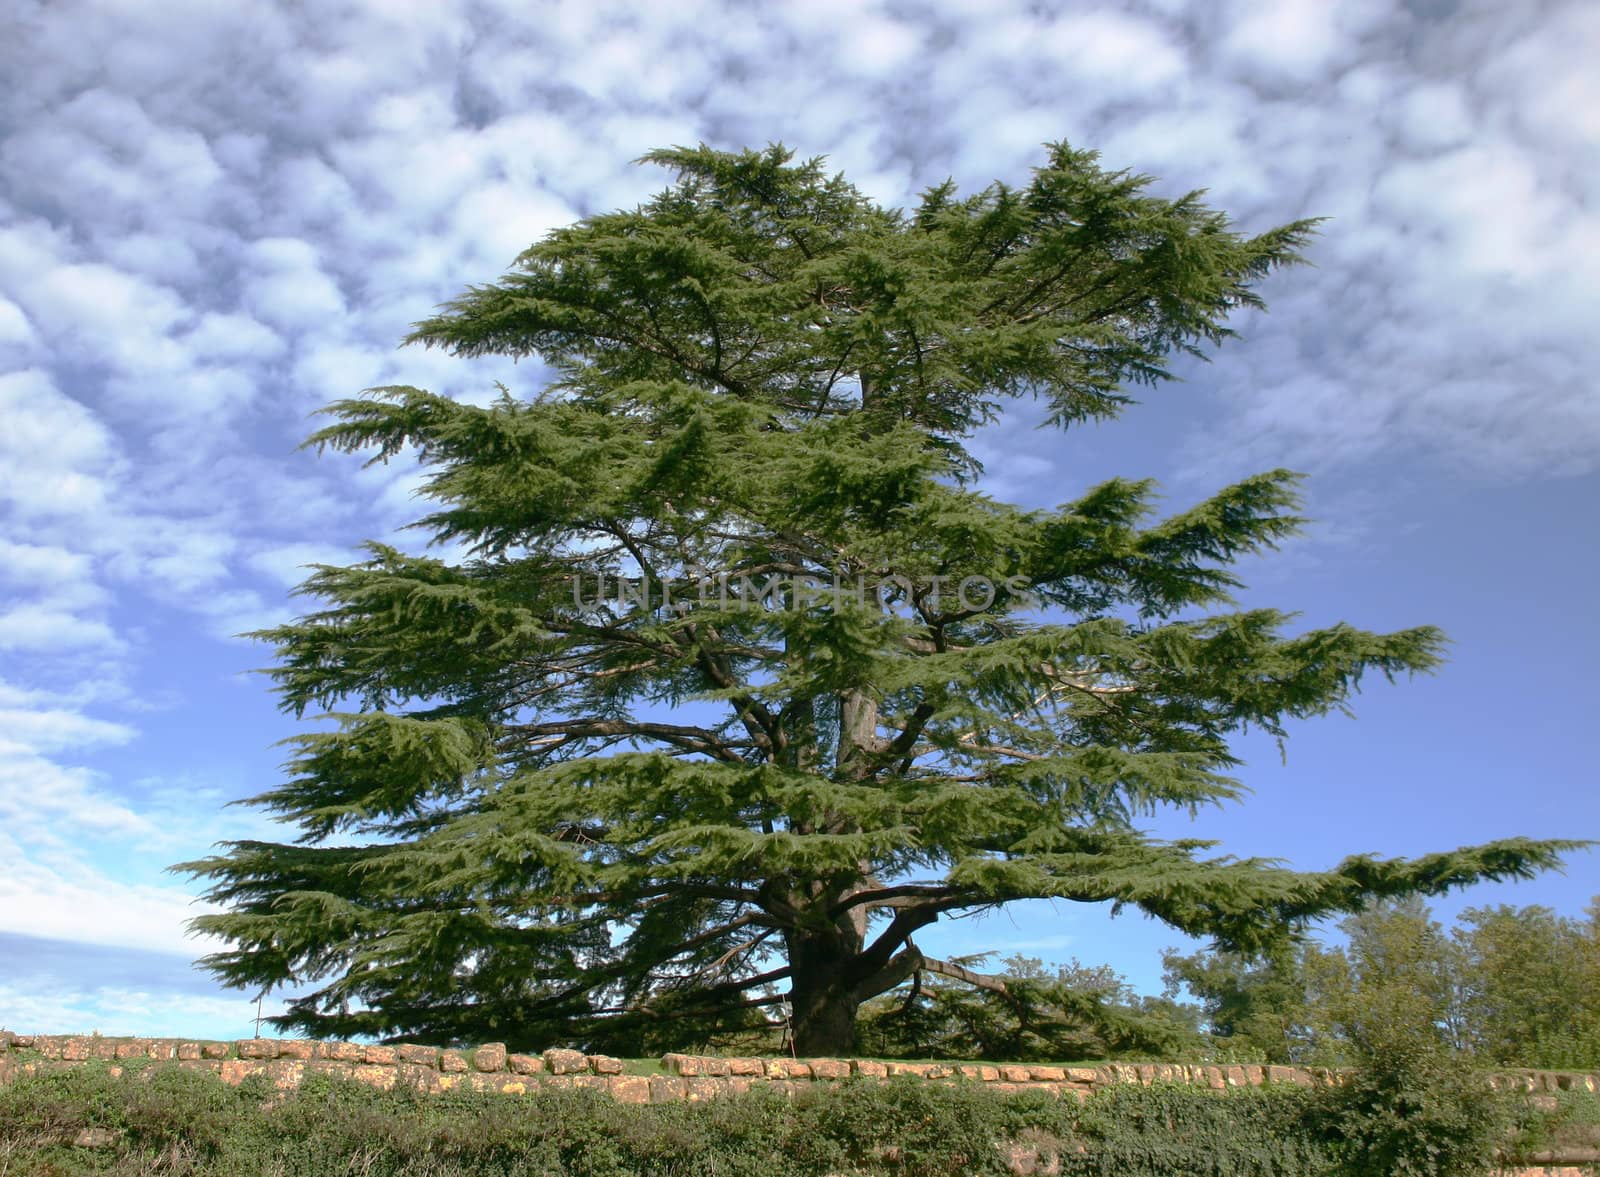 Cedar of Lebanon by hospitalera